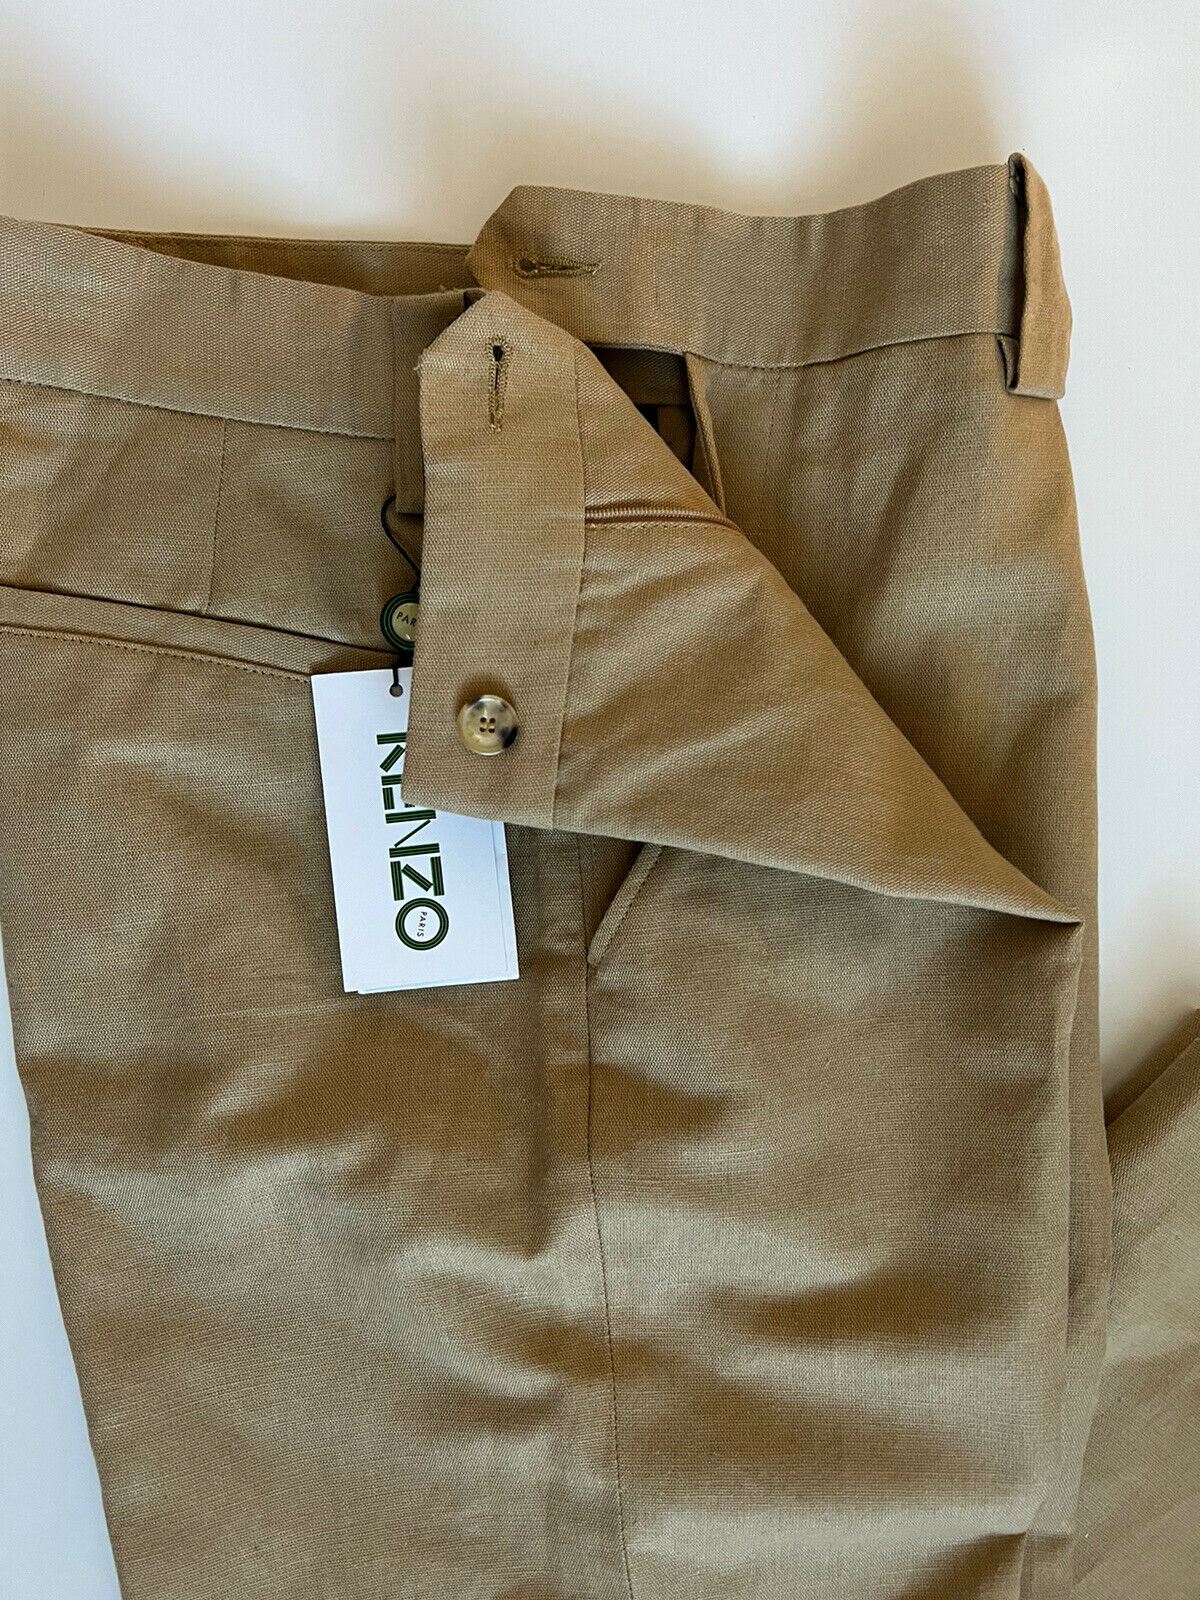 NWT $325 Kenzo Men's Dark Beige Casual Linen Pants Size 32 US (48 Euro)